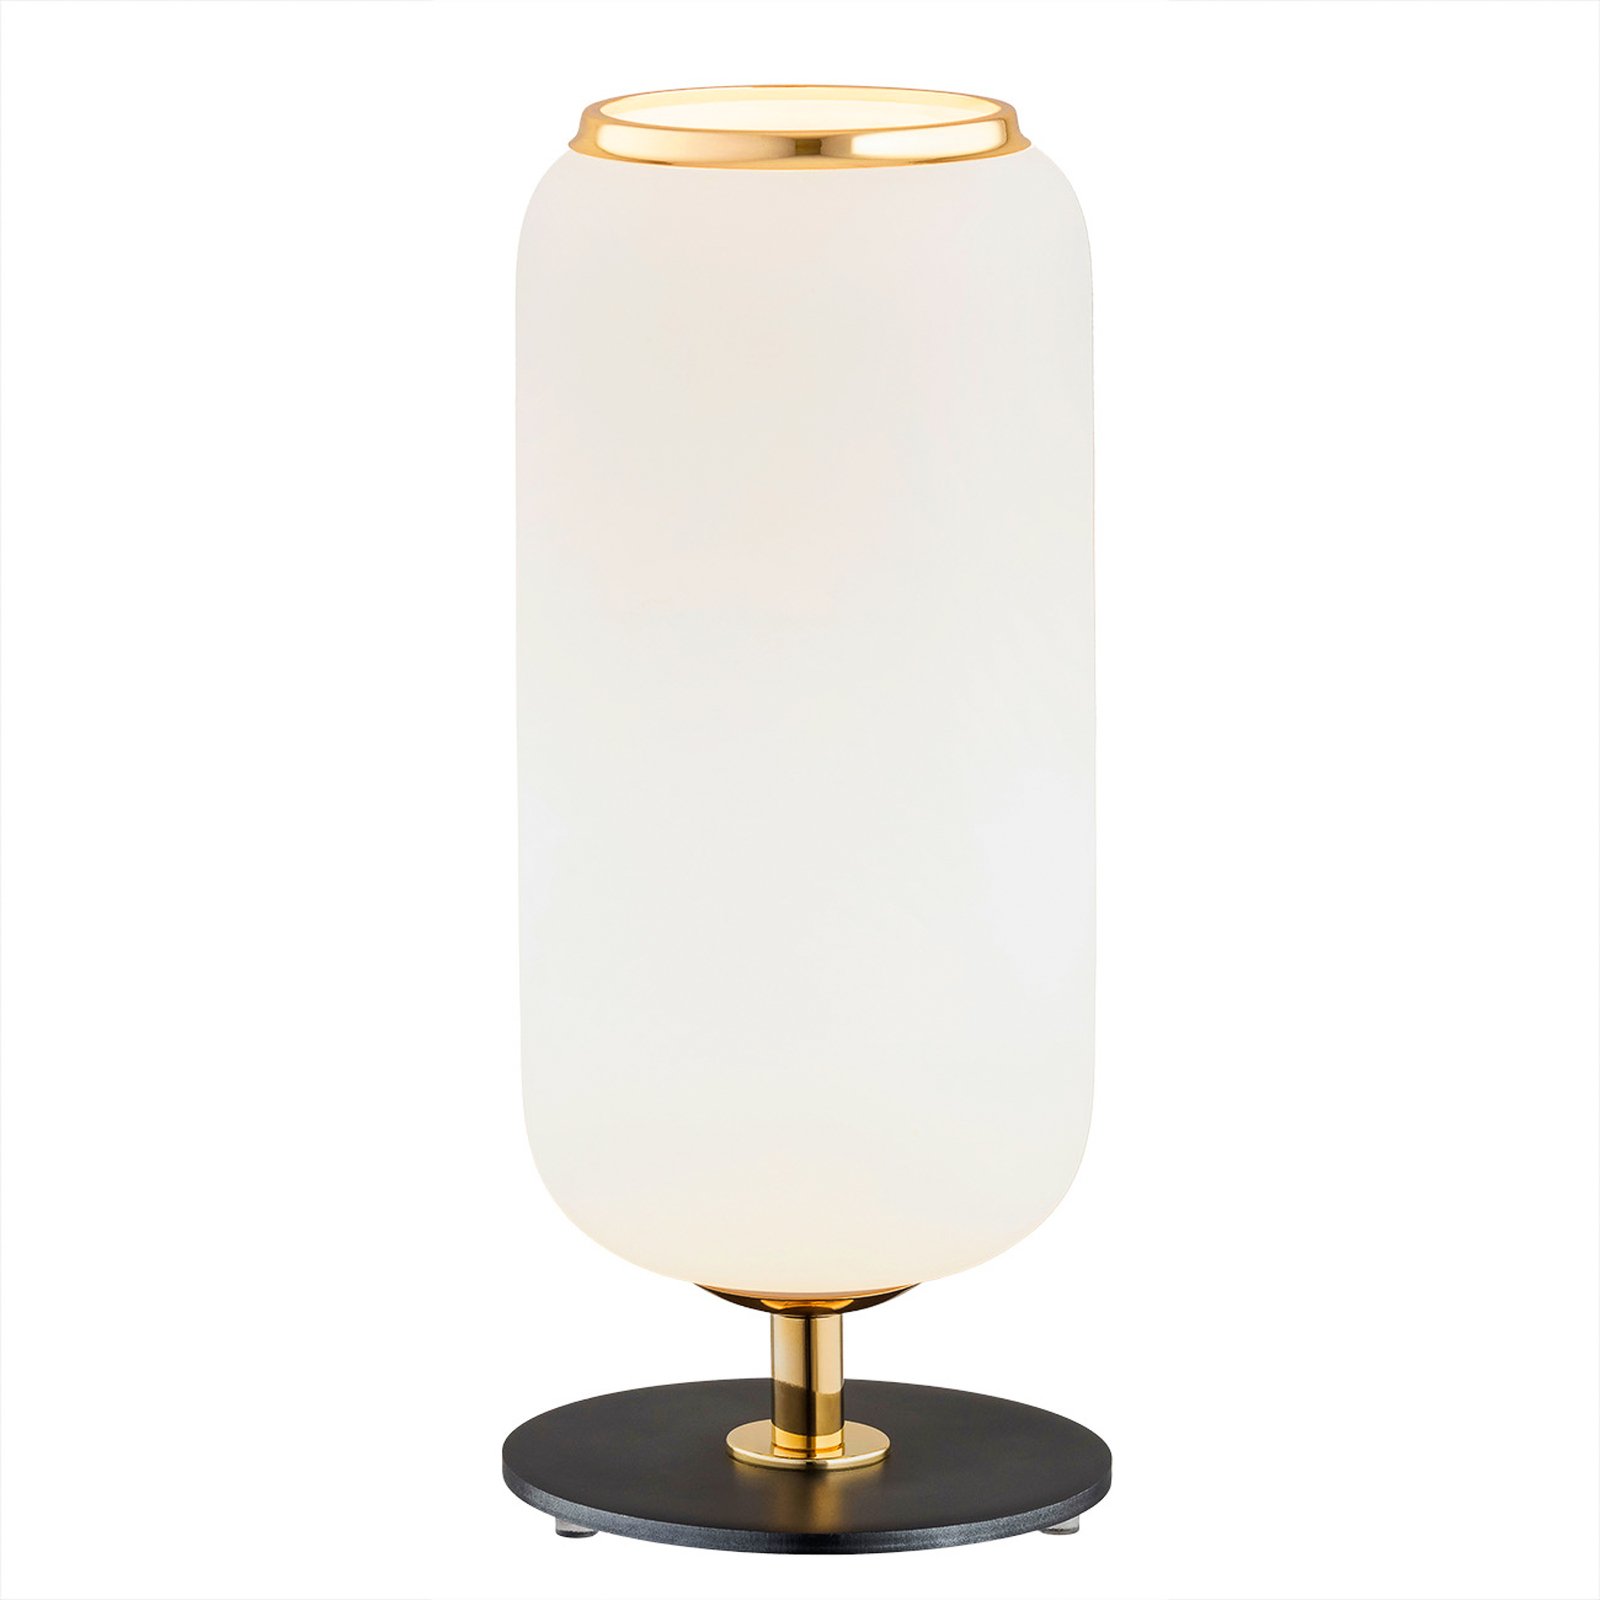 Valiano bordslampa med vit glasskärm